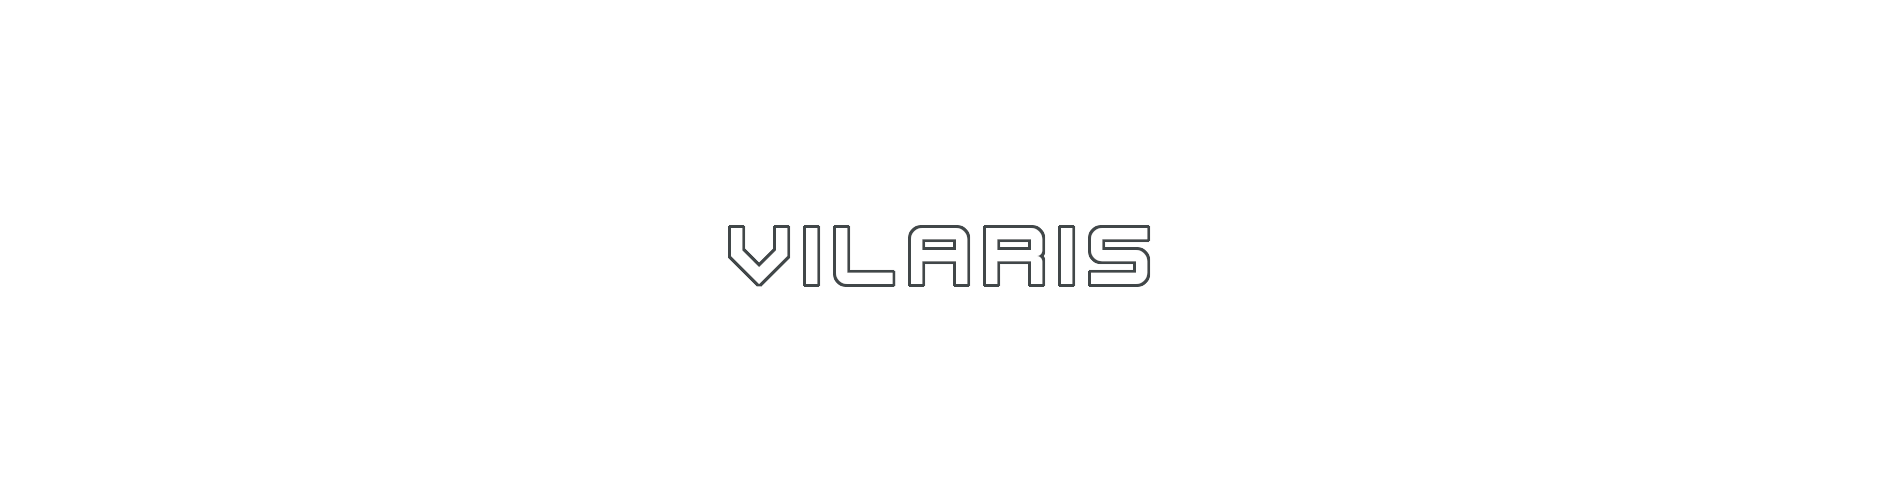 Escape From Vilaris